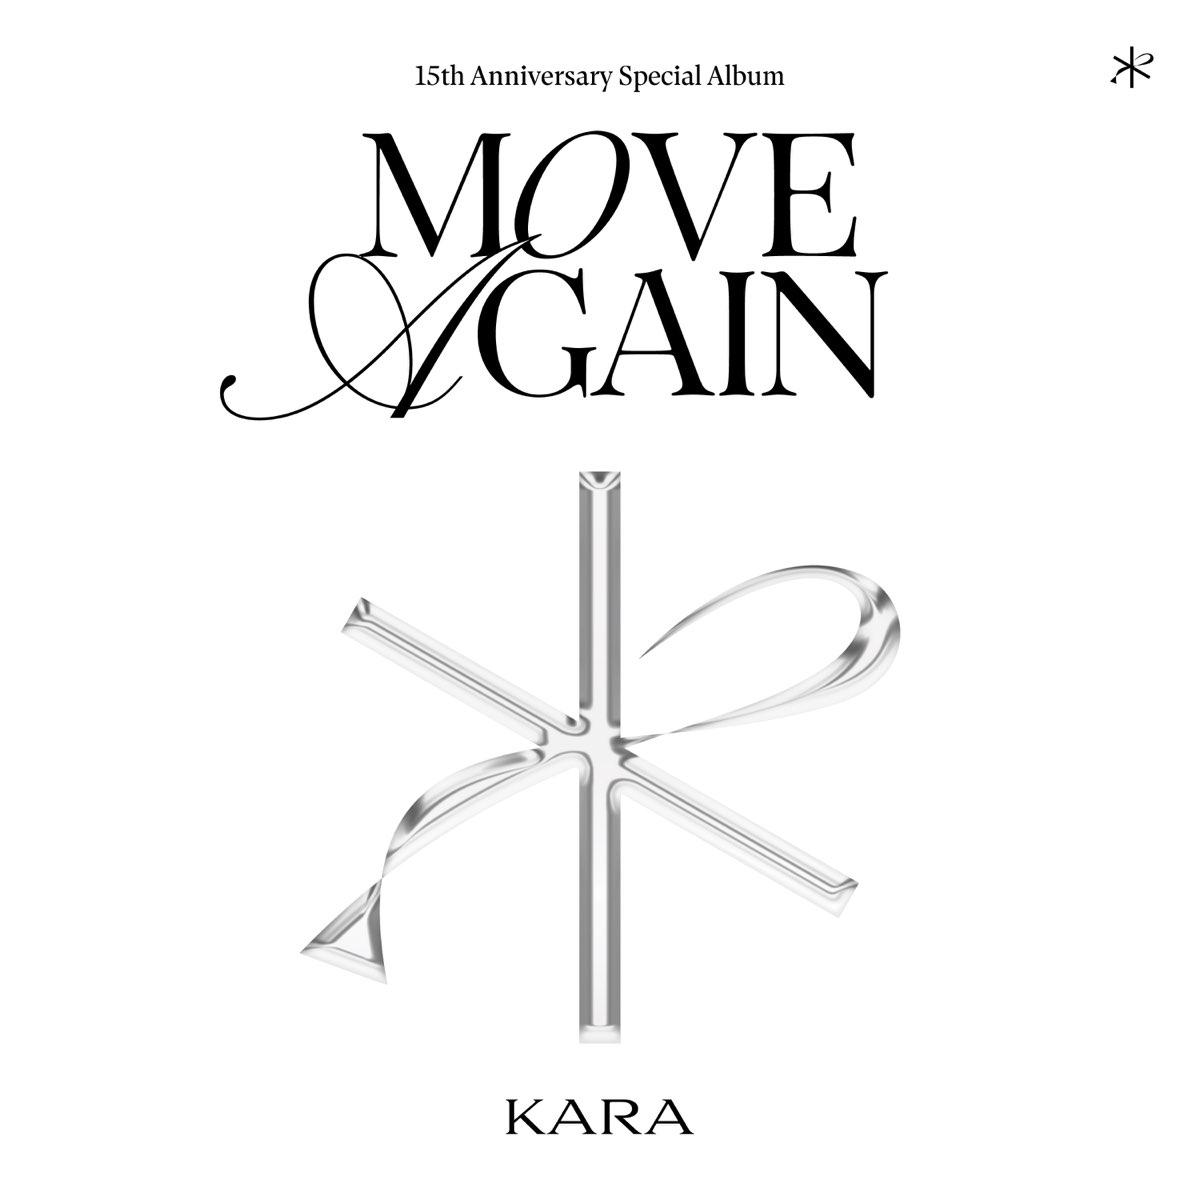 MOVE AGAIN - EP by KARA on Apple Music